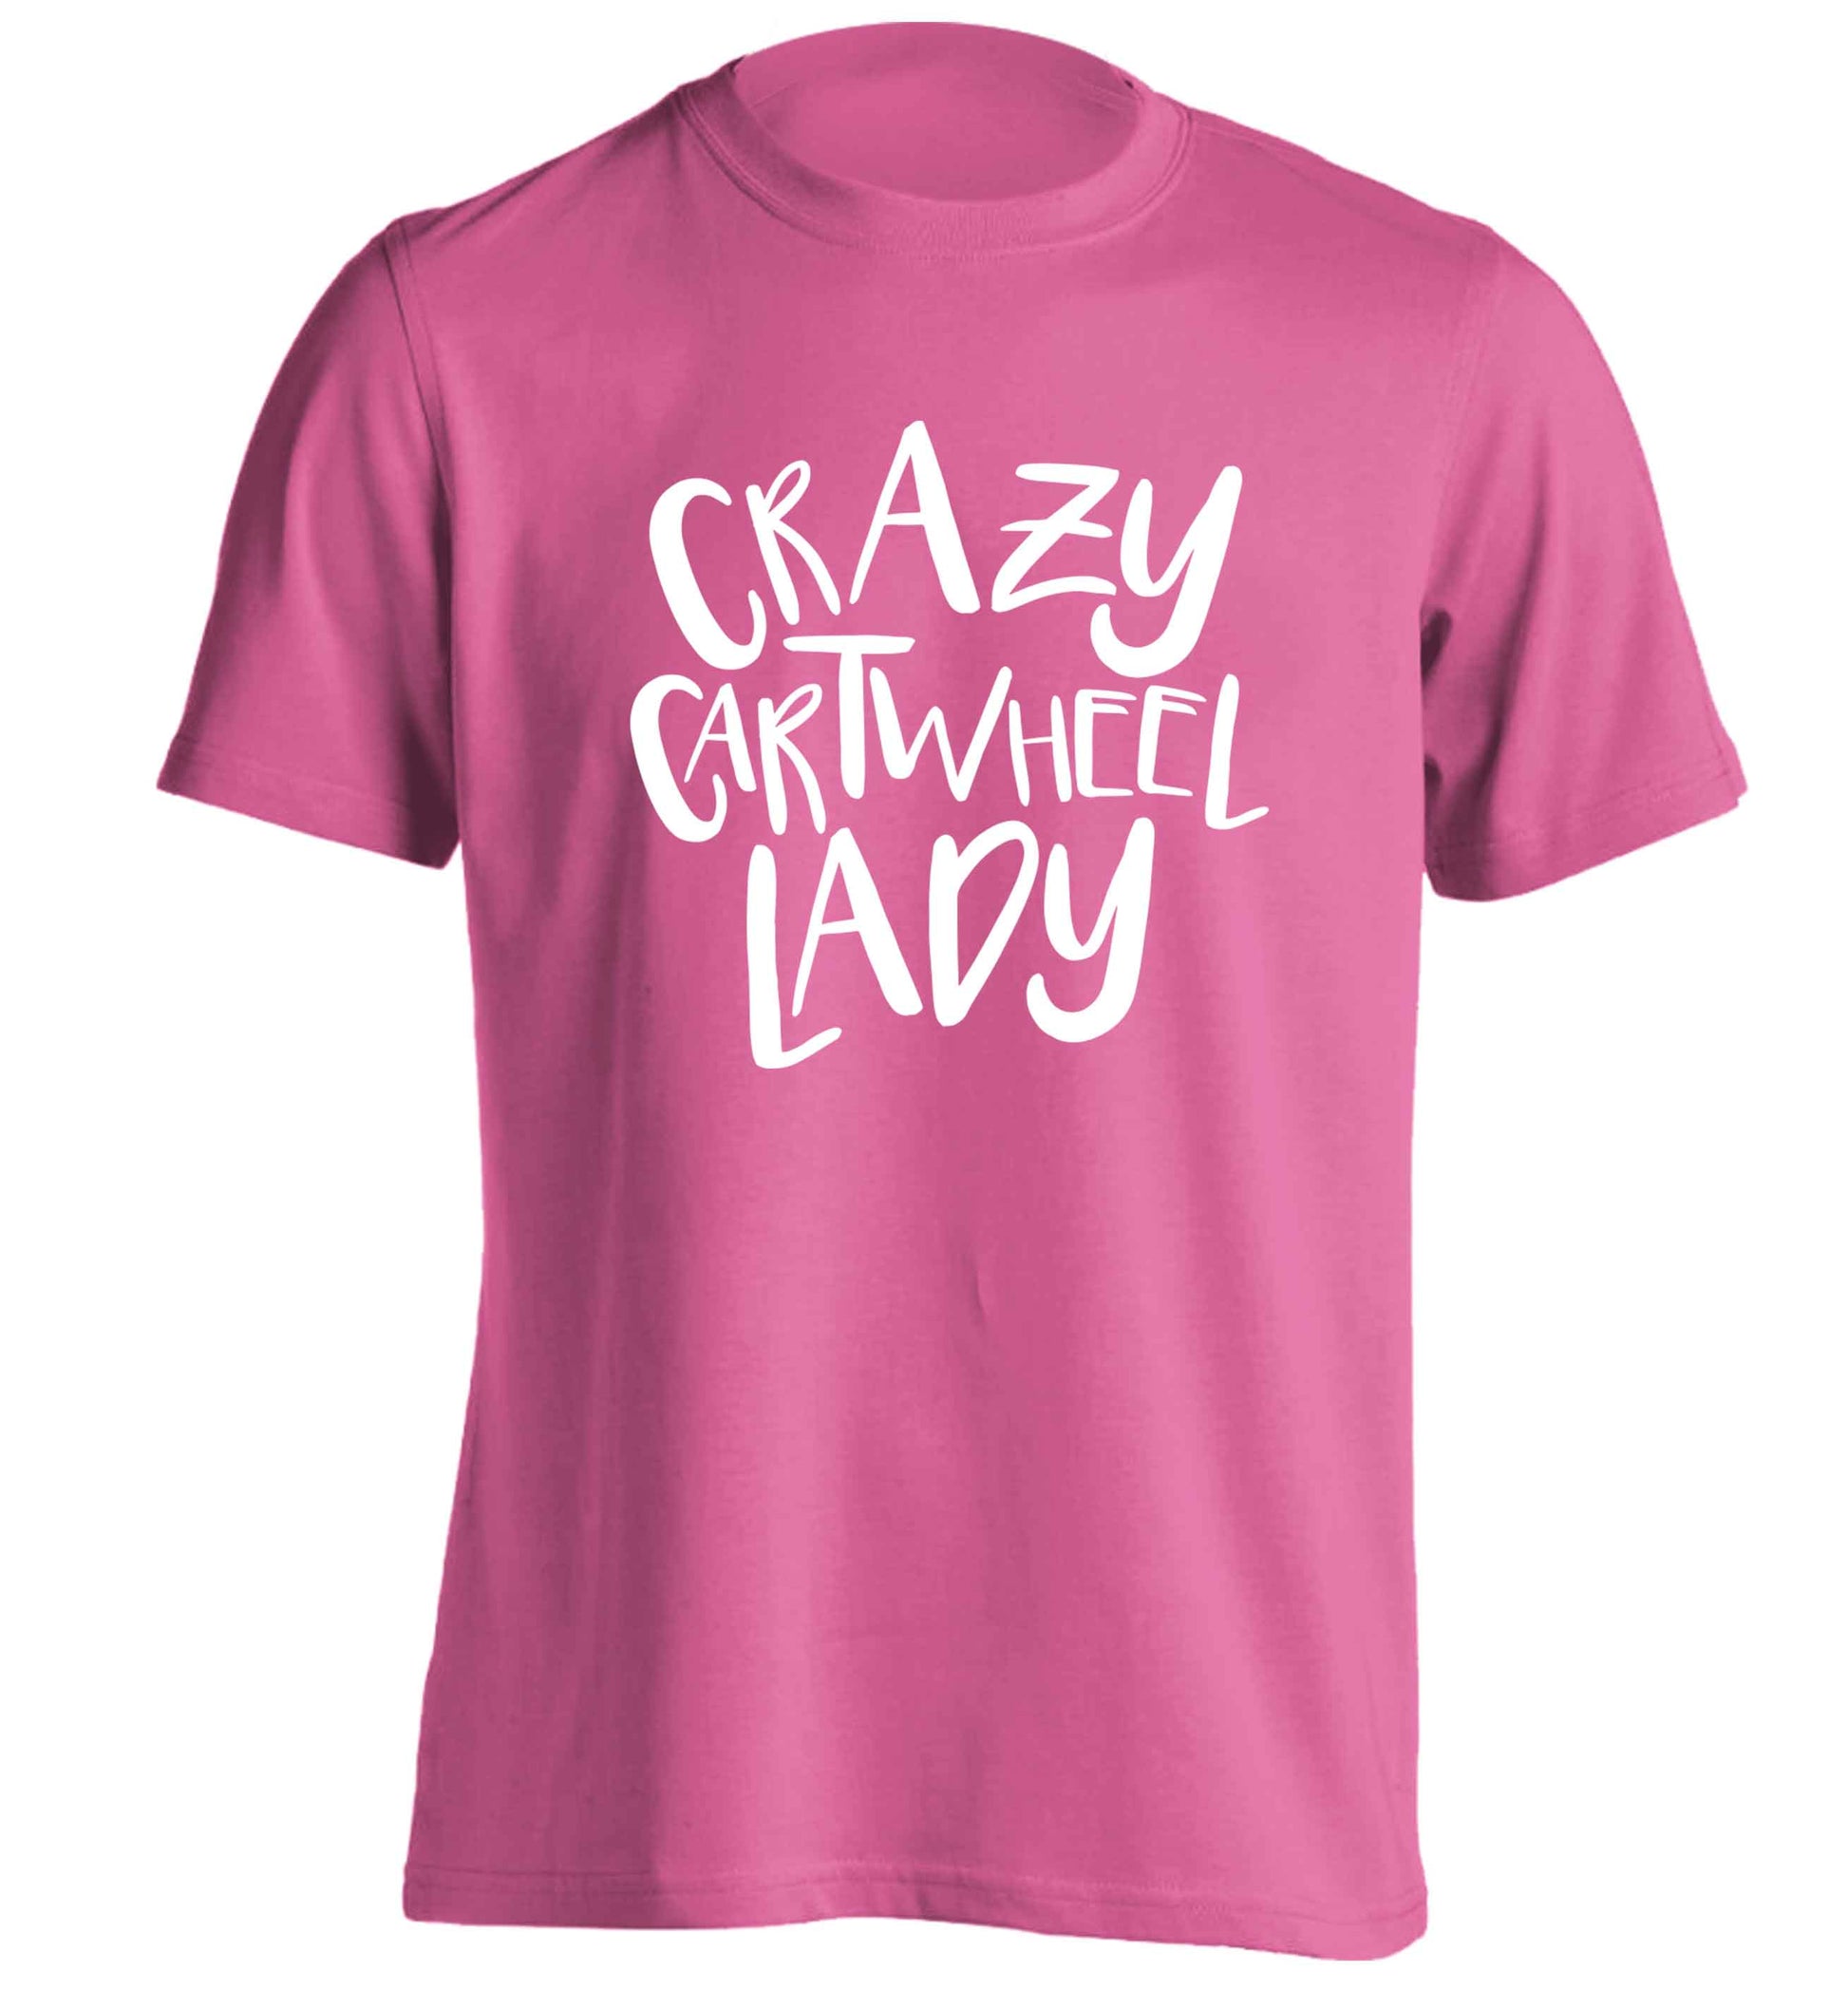 Crazy cartwheel lady adults unisex pink Tshirt 2XL